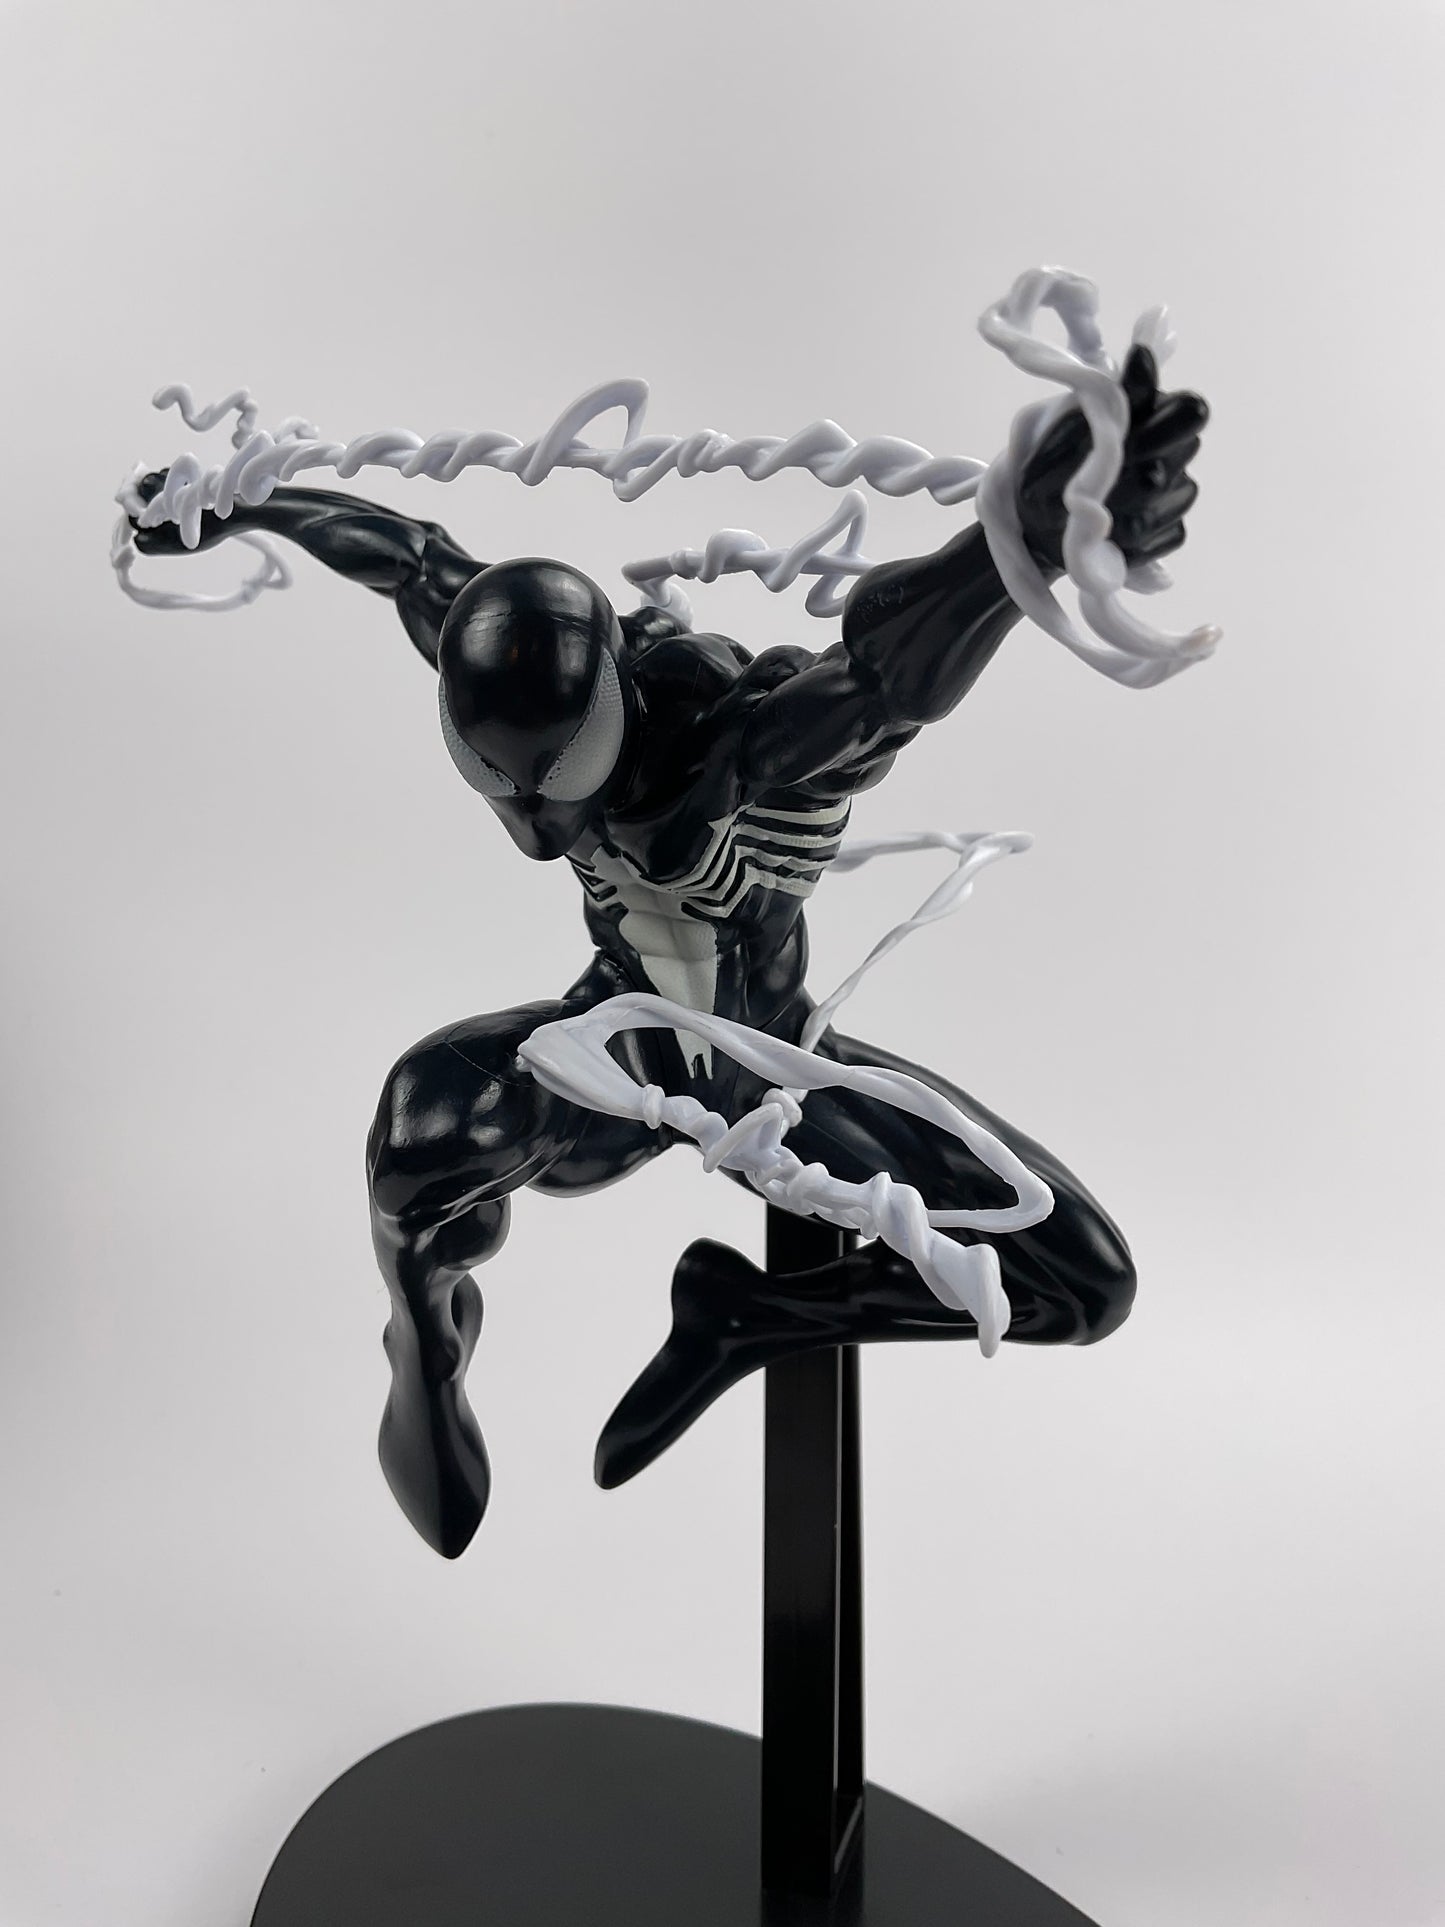 Marvel comics, Luminasta, Black Costume SPIDER-MAN venom spiderman